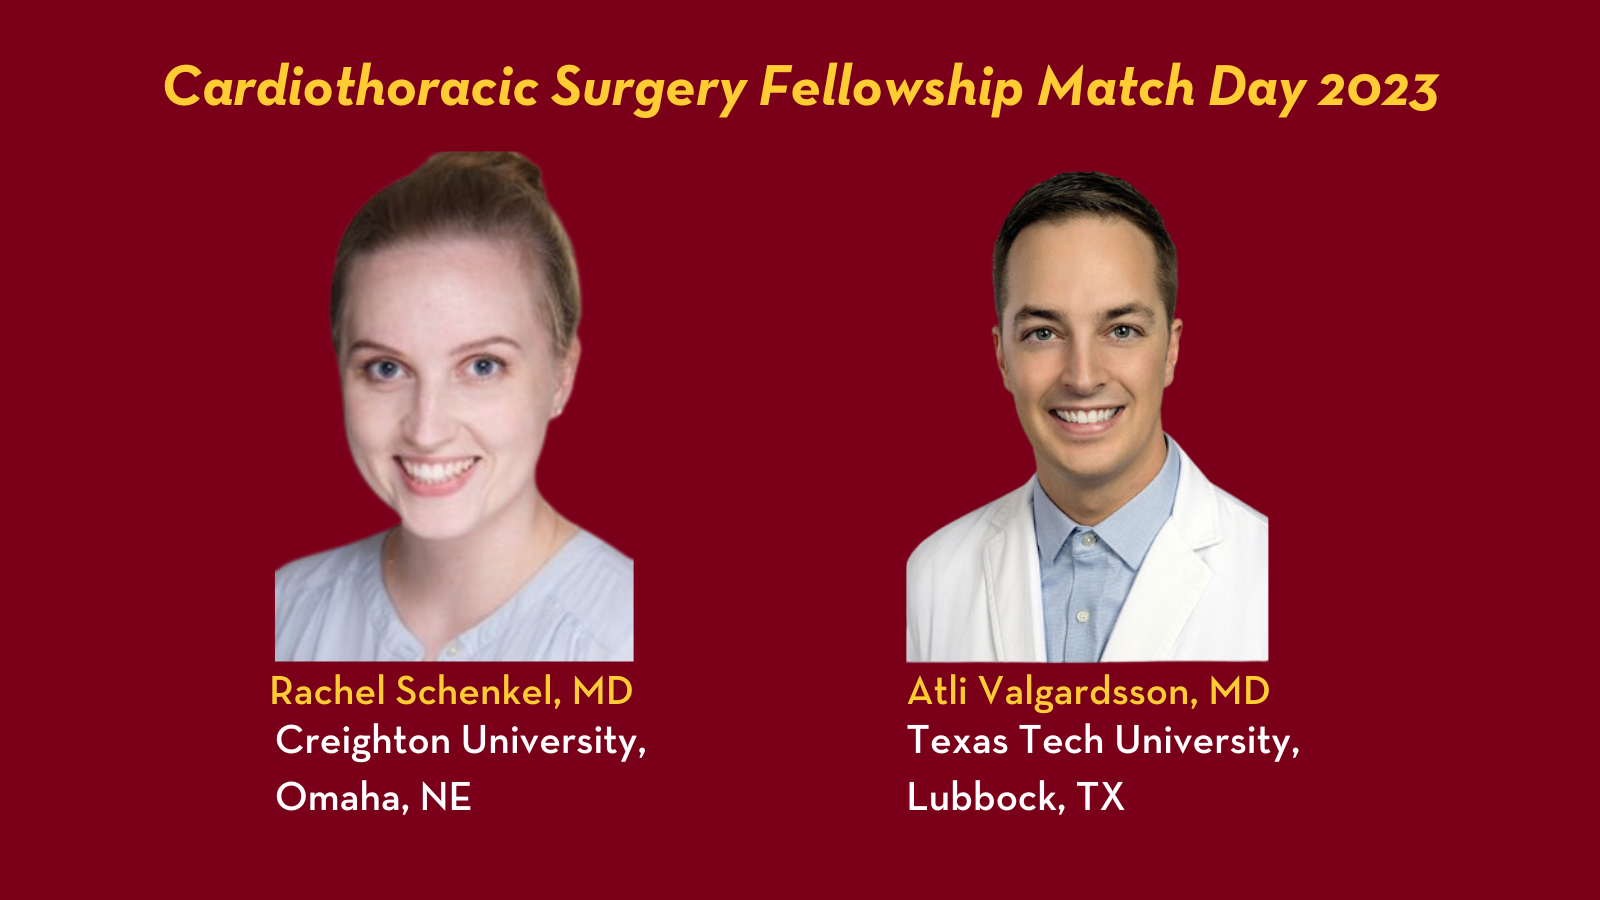 newly matched Cardiothoracic Surgery Fellowship Program fellows!